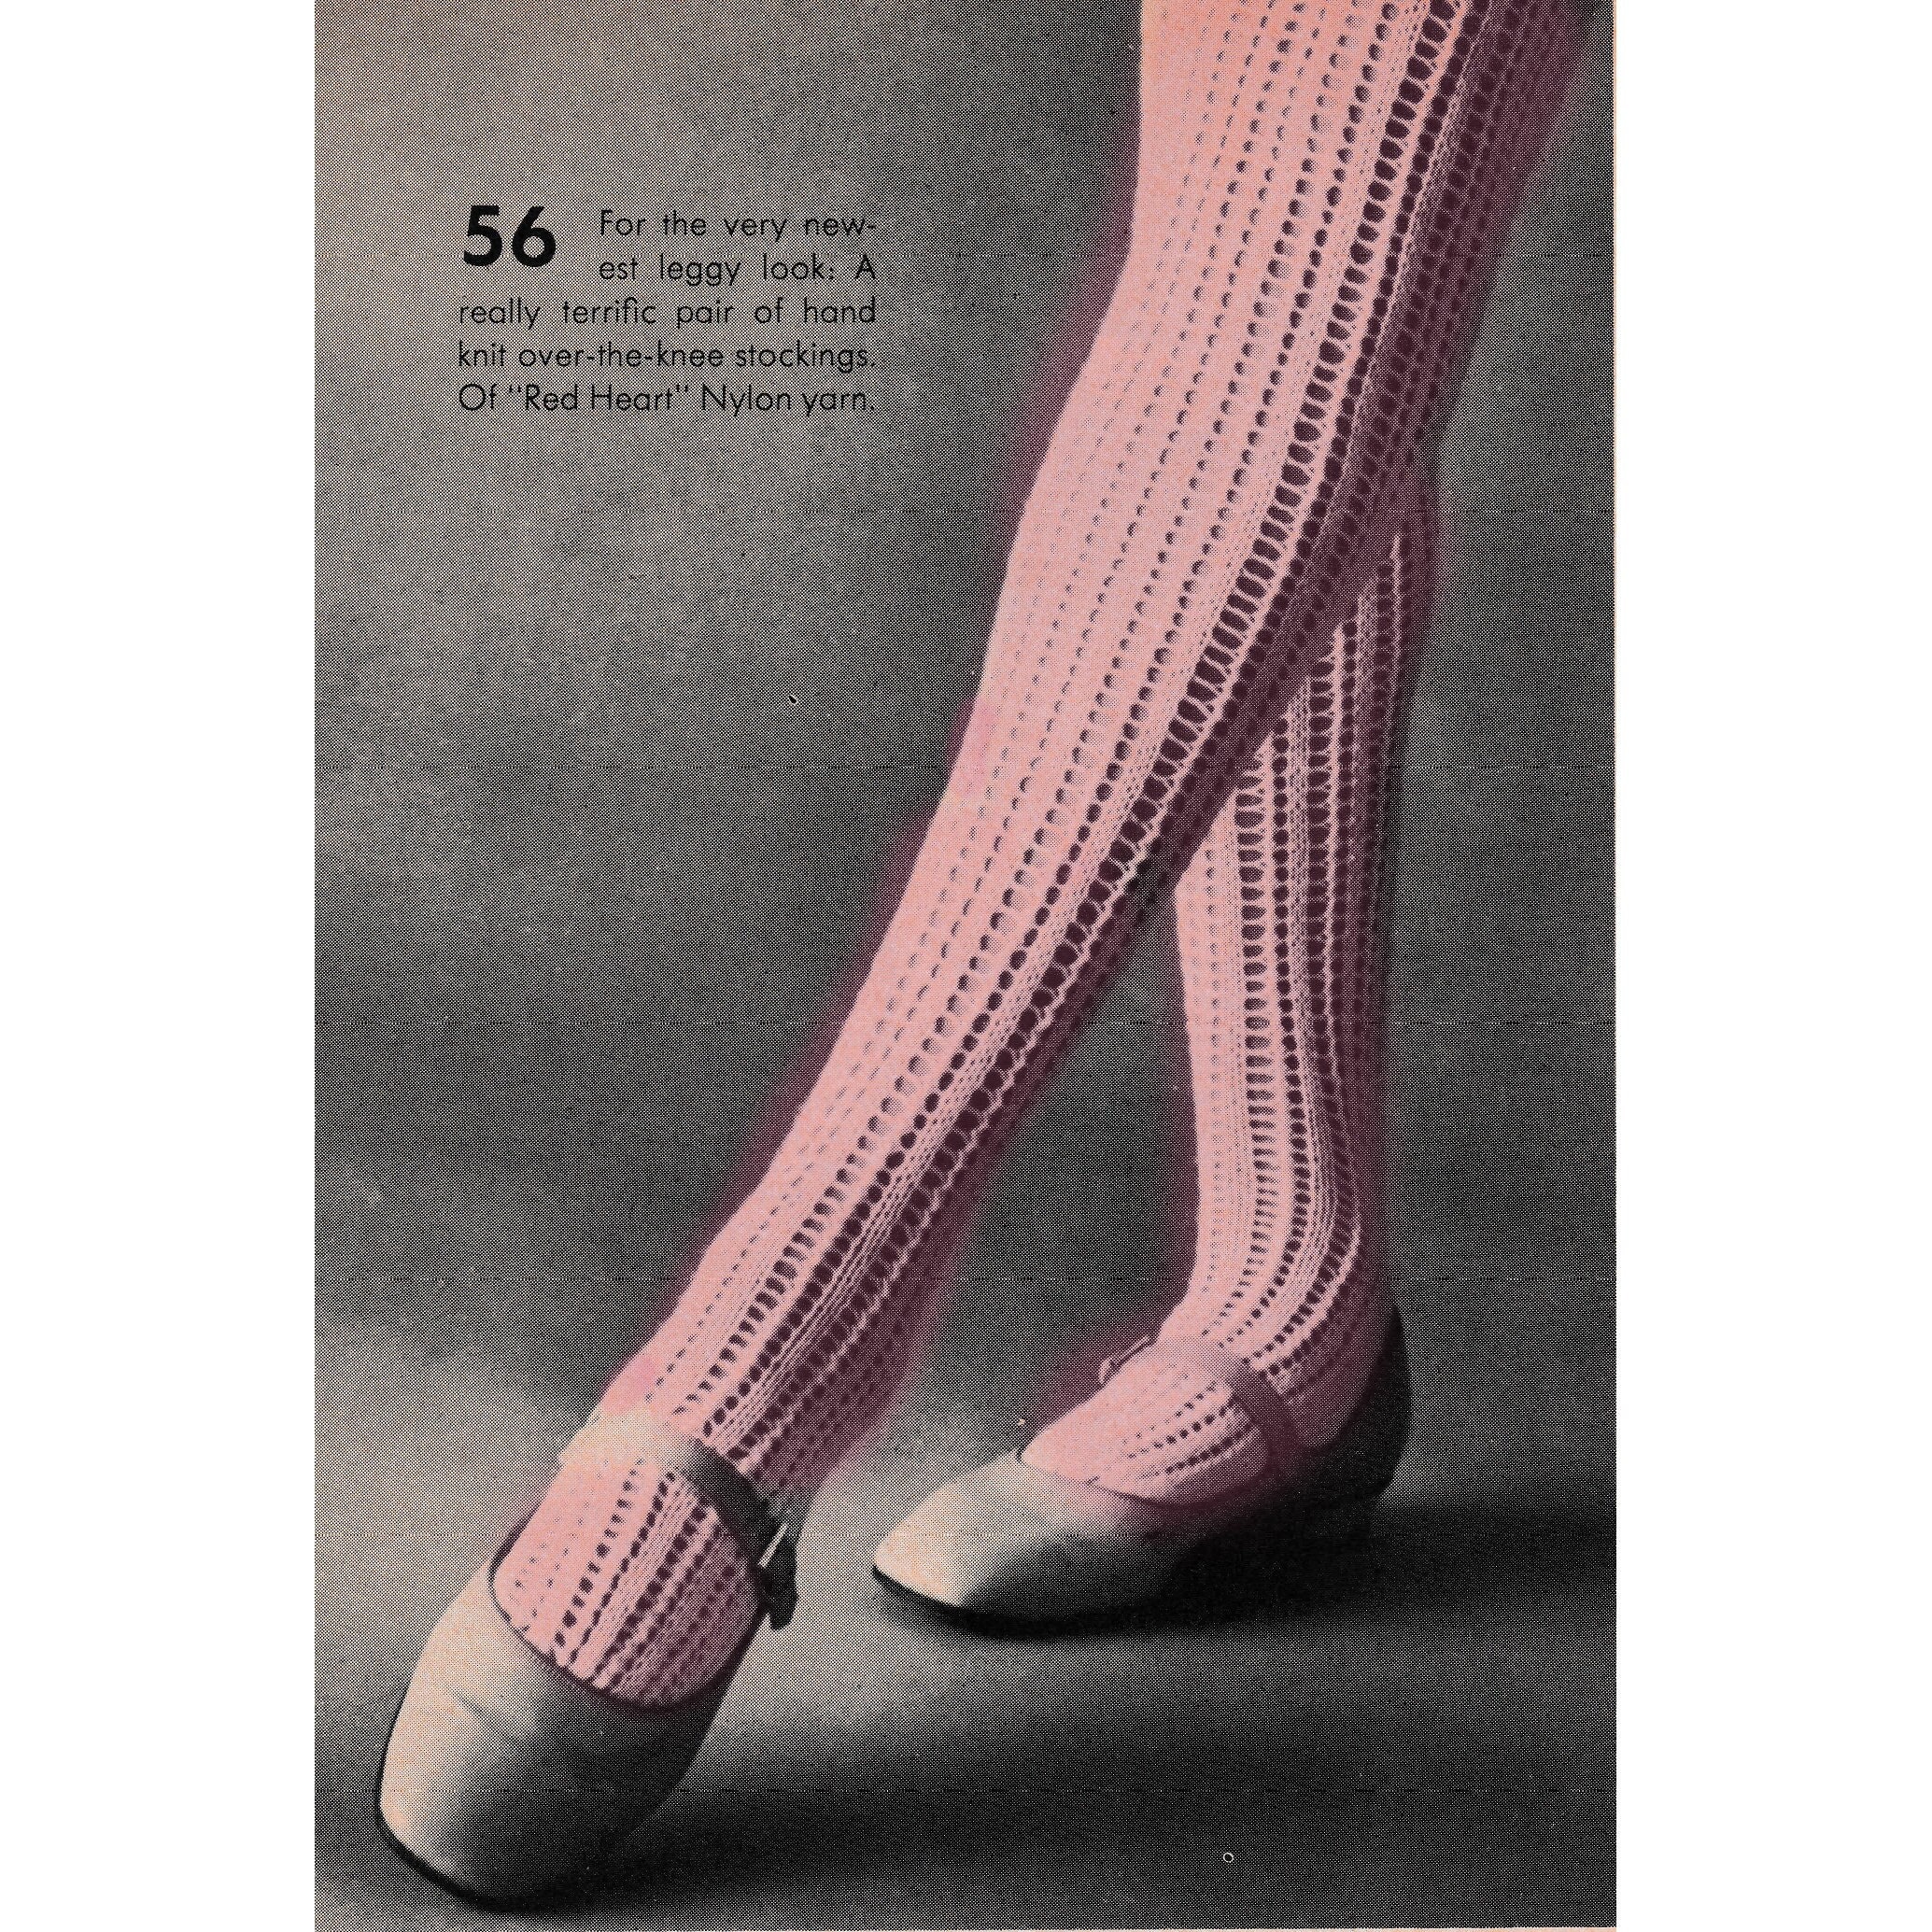 1960s Tights, Stockings, Panty Hose, Knee High Socks